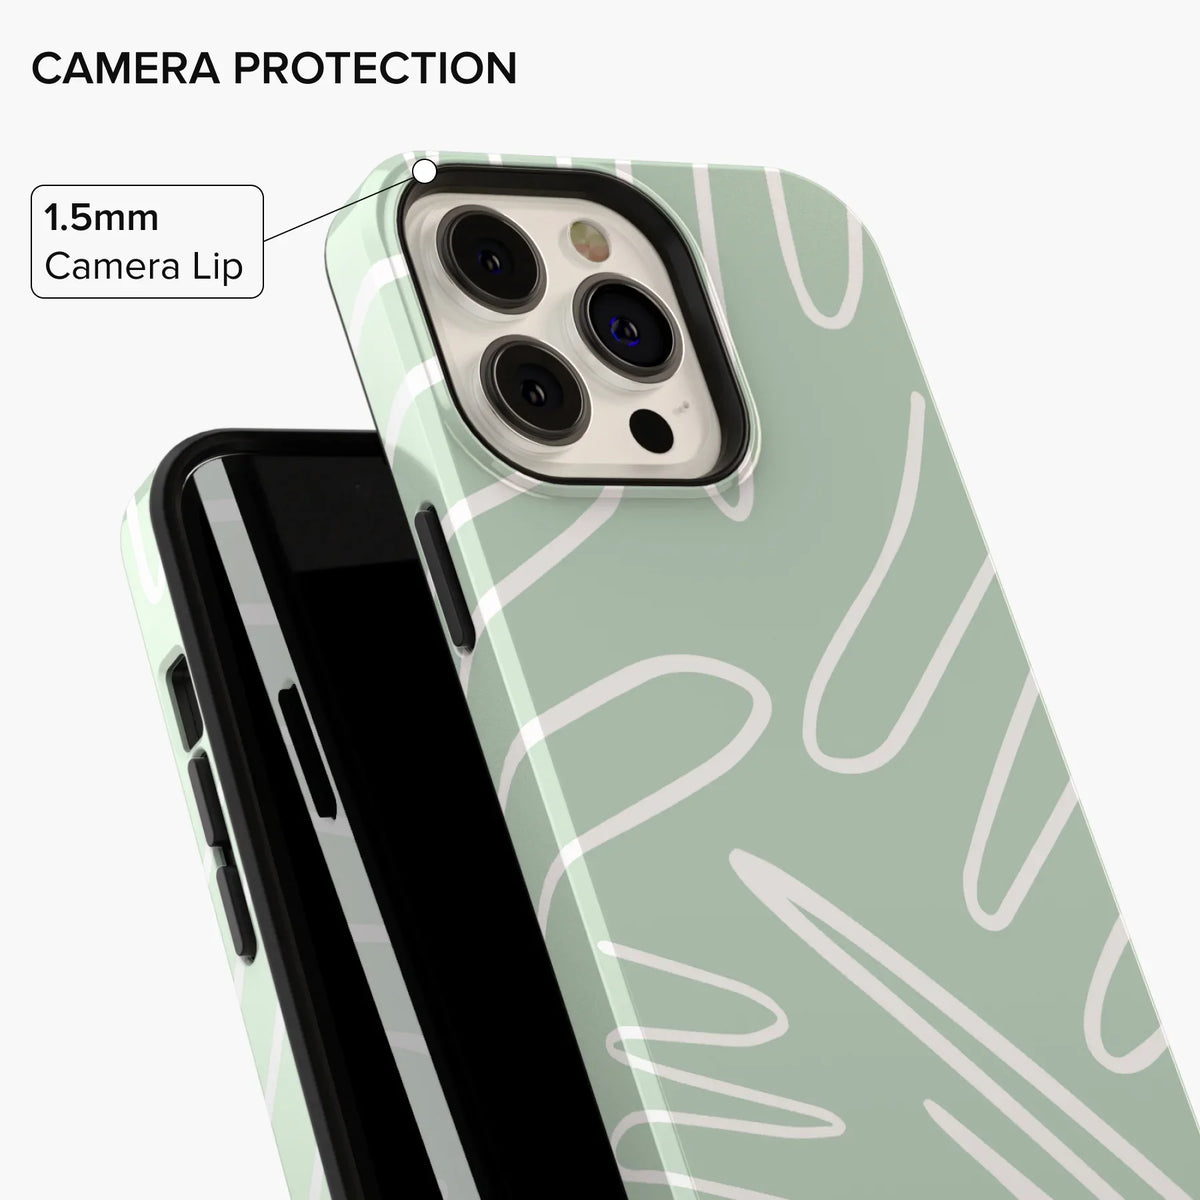 Green Rhythm iPhone Case - iPhone 11 Pro Max